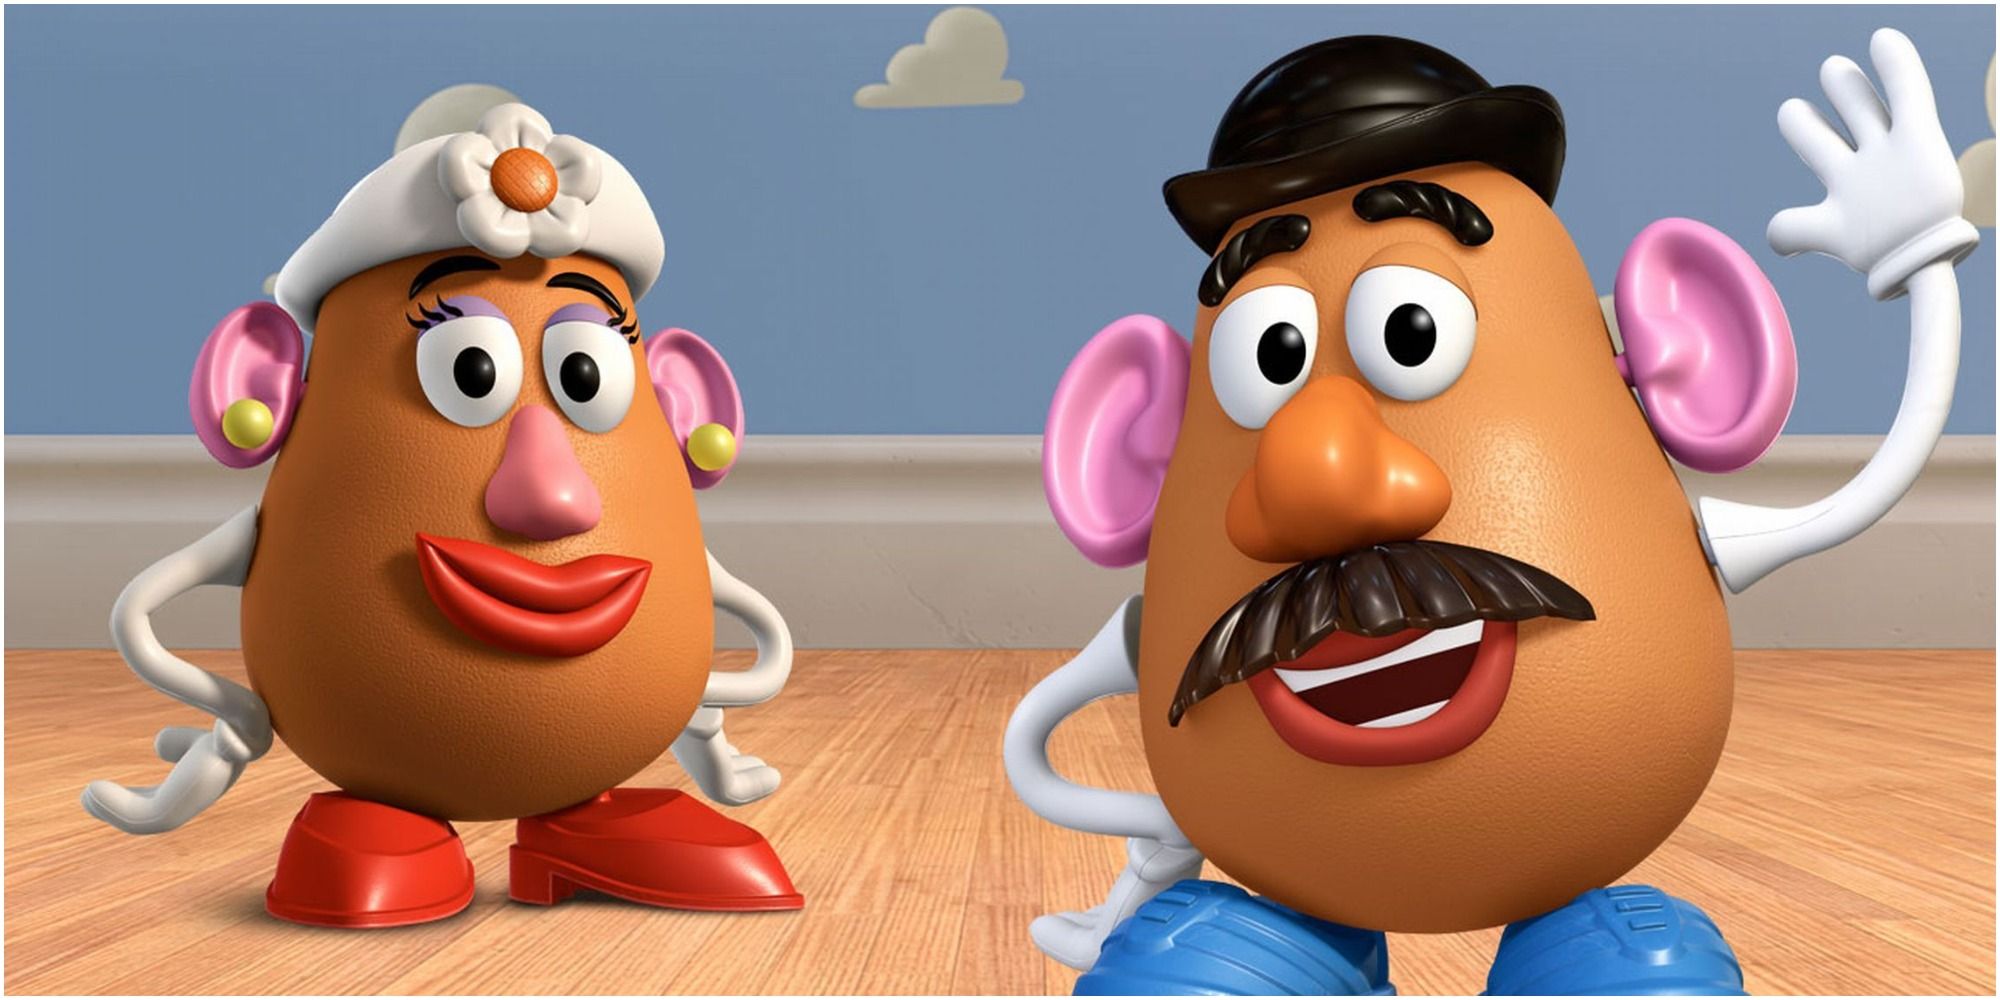 Mr potato. Мистер картошка. Мистер картофельная голова. Мистер картошка из истории игрушек. Миссис картошка.